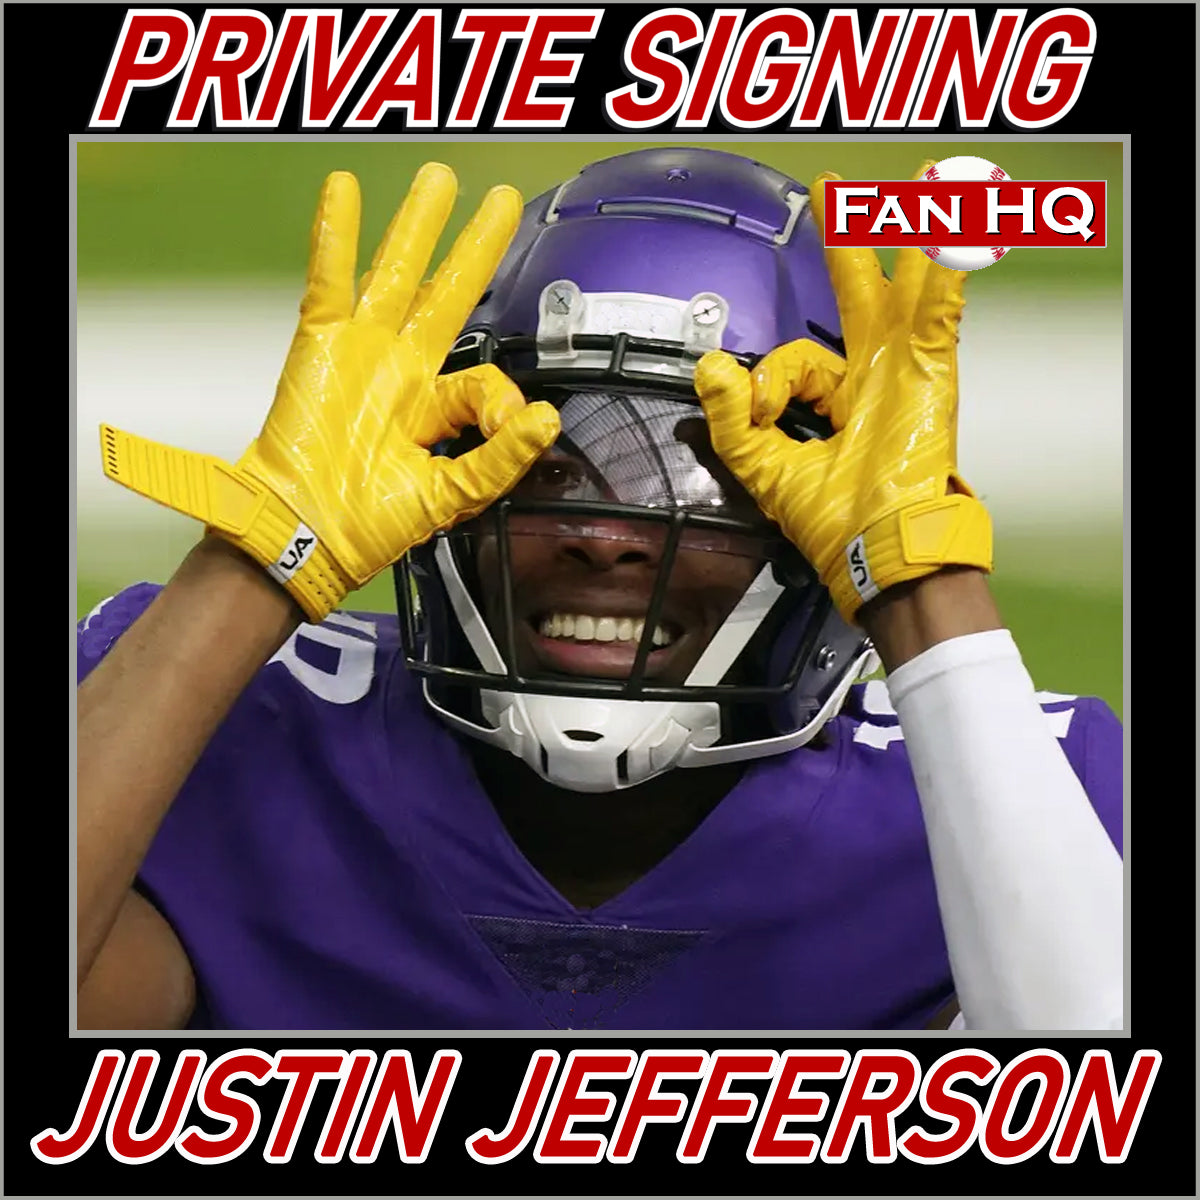 Justin Jefferson Autographed Fan HQ Exclusive Blackout Nickname Jersey